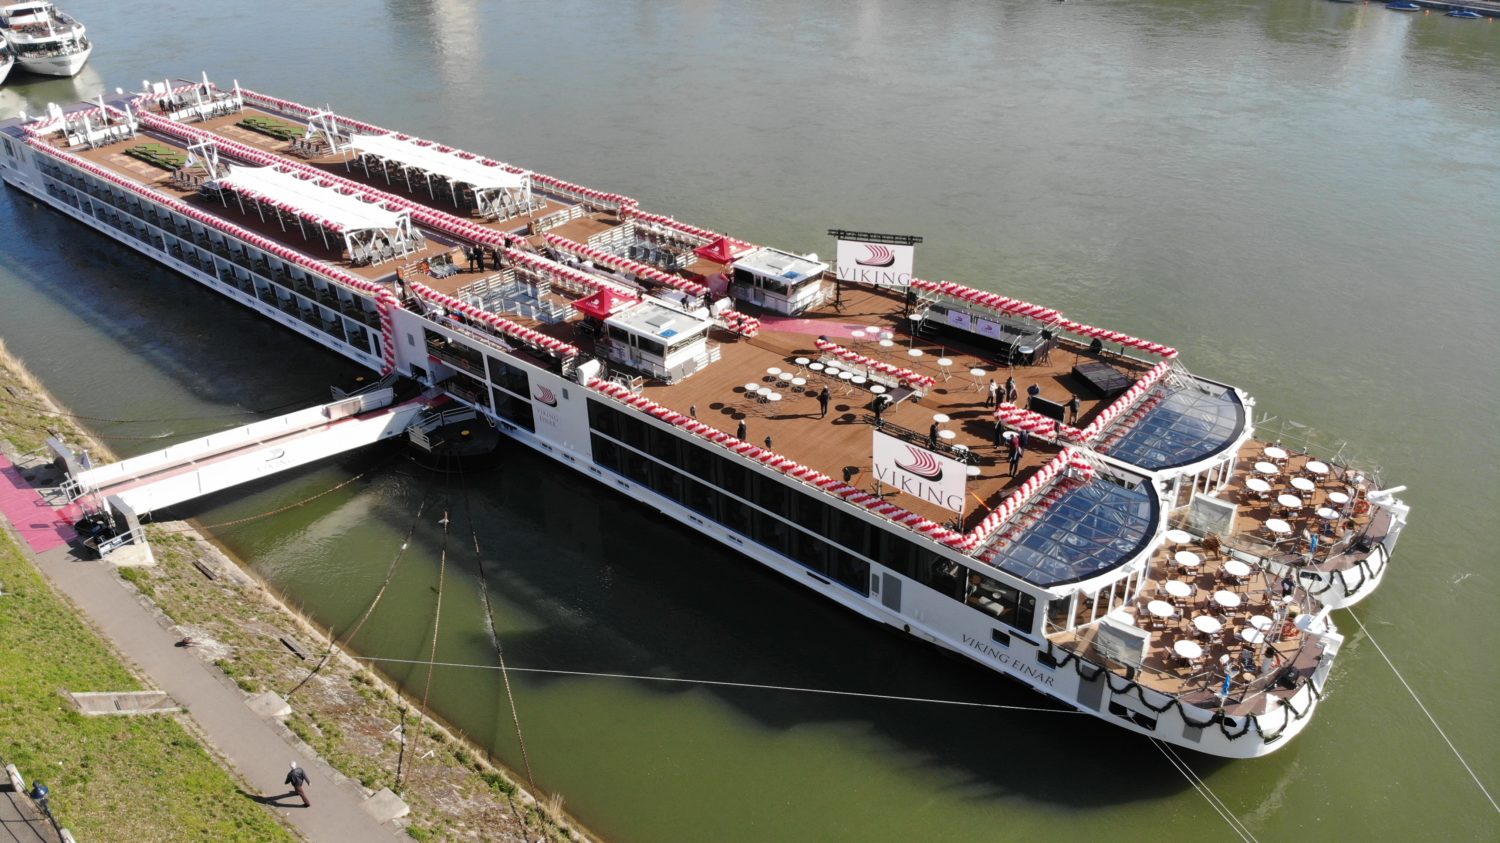 river cruise ships size